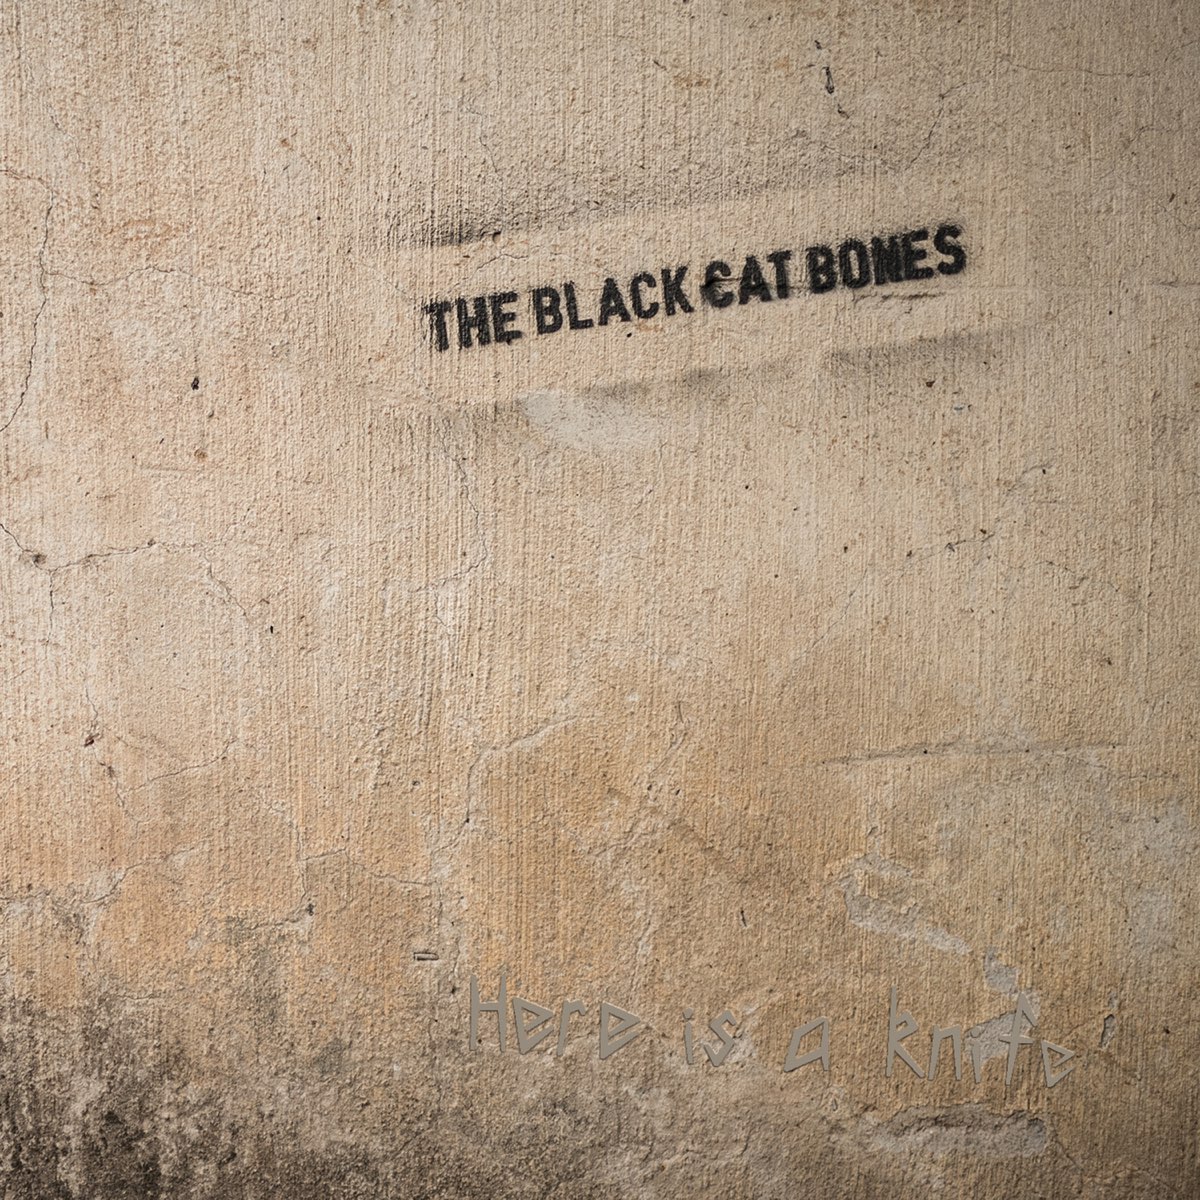 Black cat bone. The Black Cat Bones here is a Knife 2018. Black Cat Bones - the long Drive. Black Cat Bones - barbed wire Sandwich (1969). Black Cat Bones-Tattered and torn(2019).